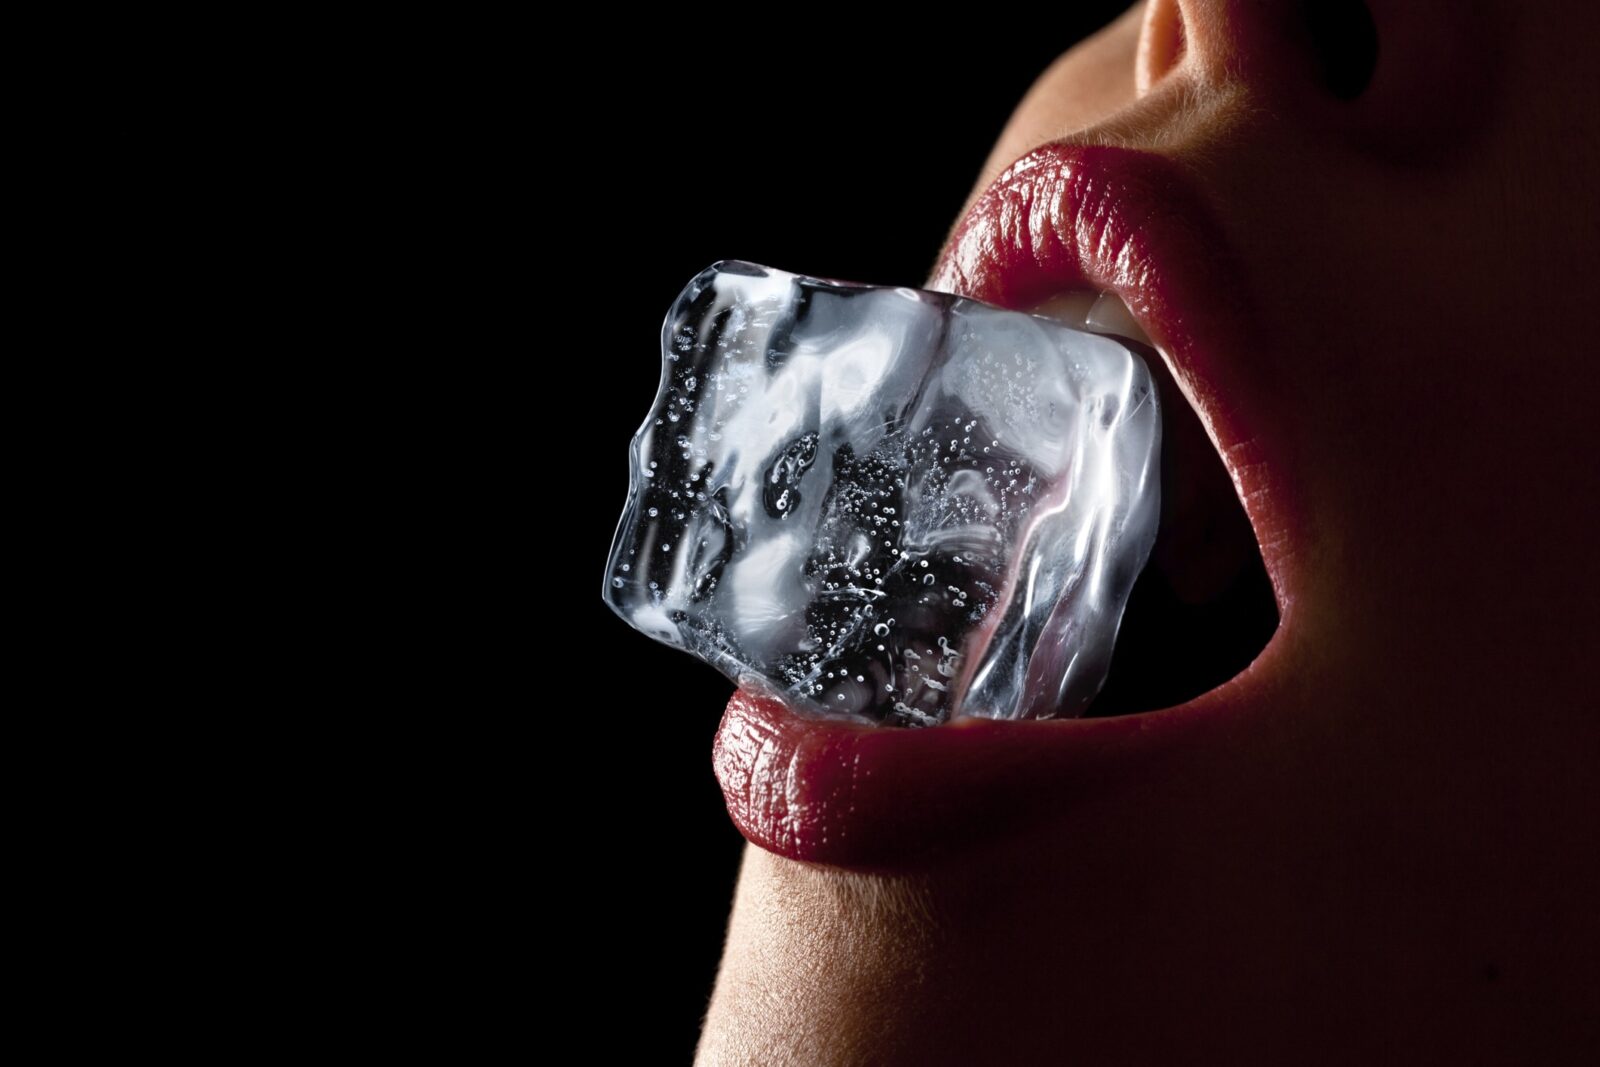 Кубик льда во рту (картинка, как девушка держит зубами кубик льда)